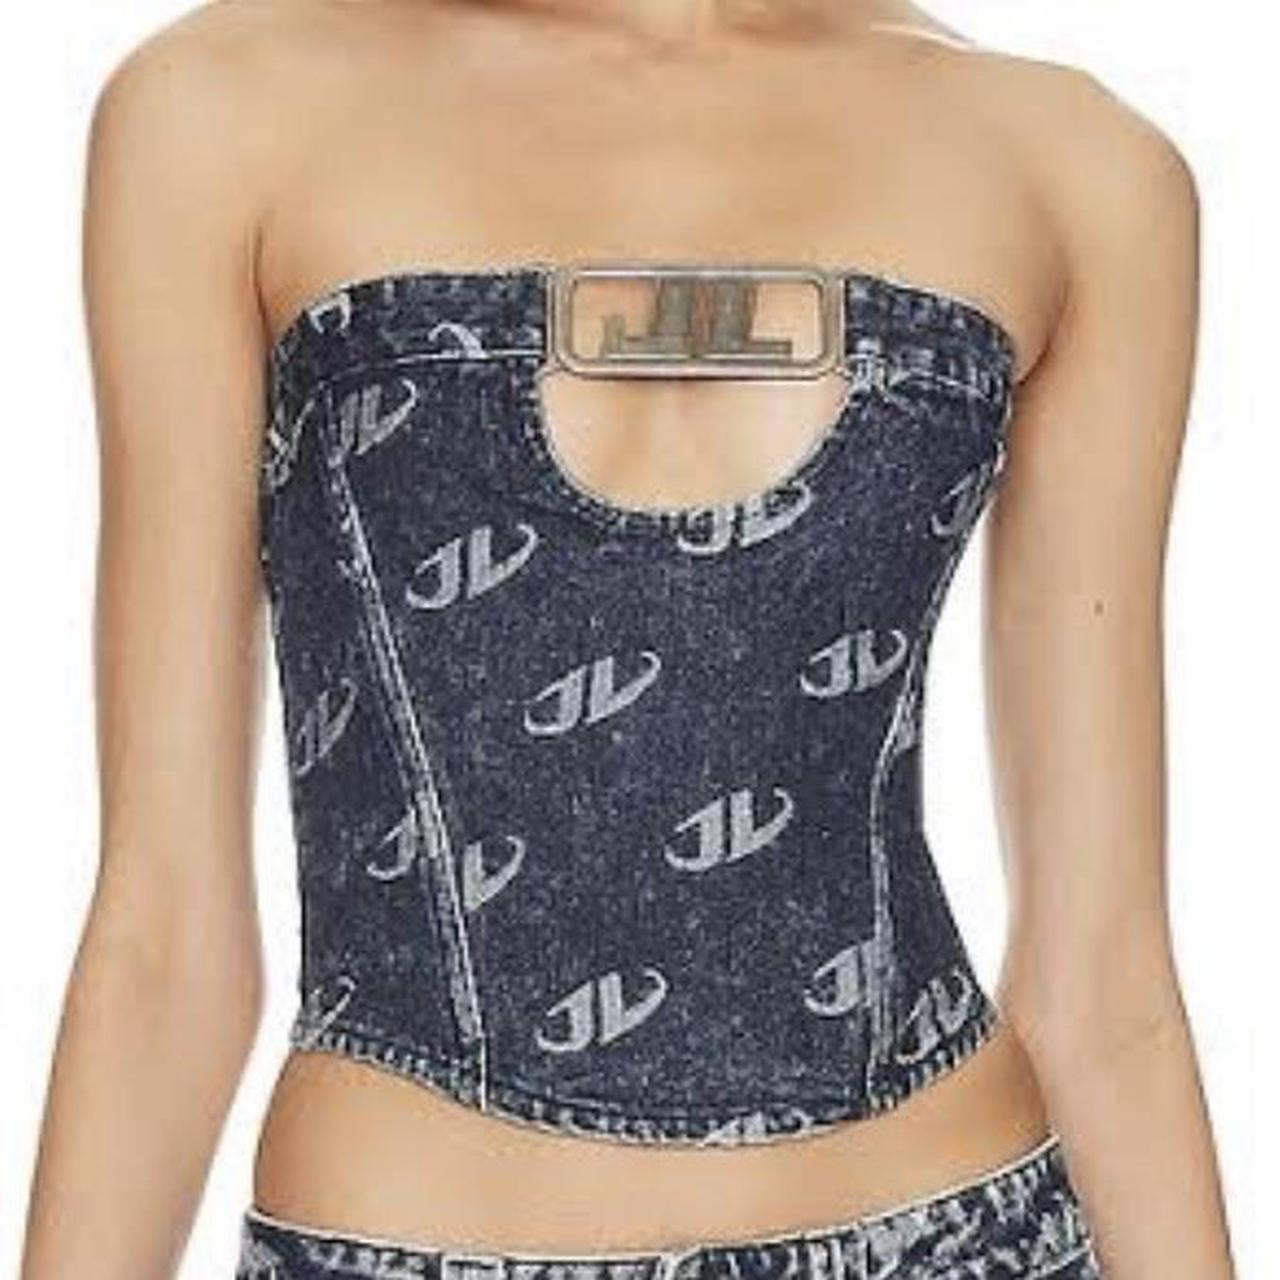 REPOP - Jaded London - monogram strapless corset top - Depop